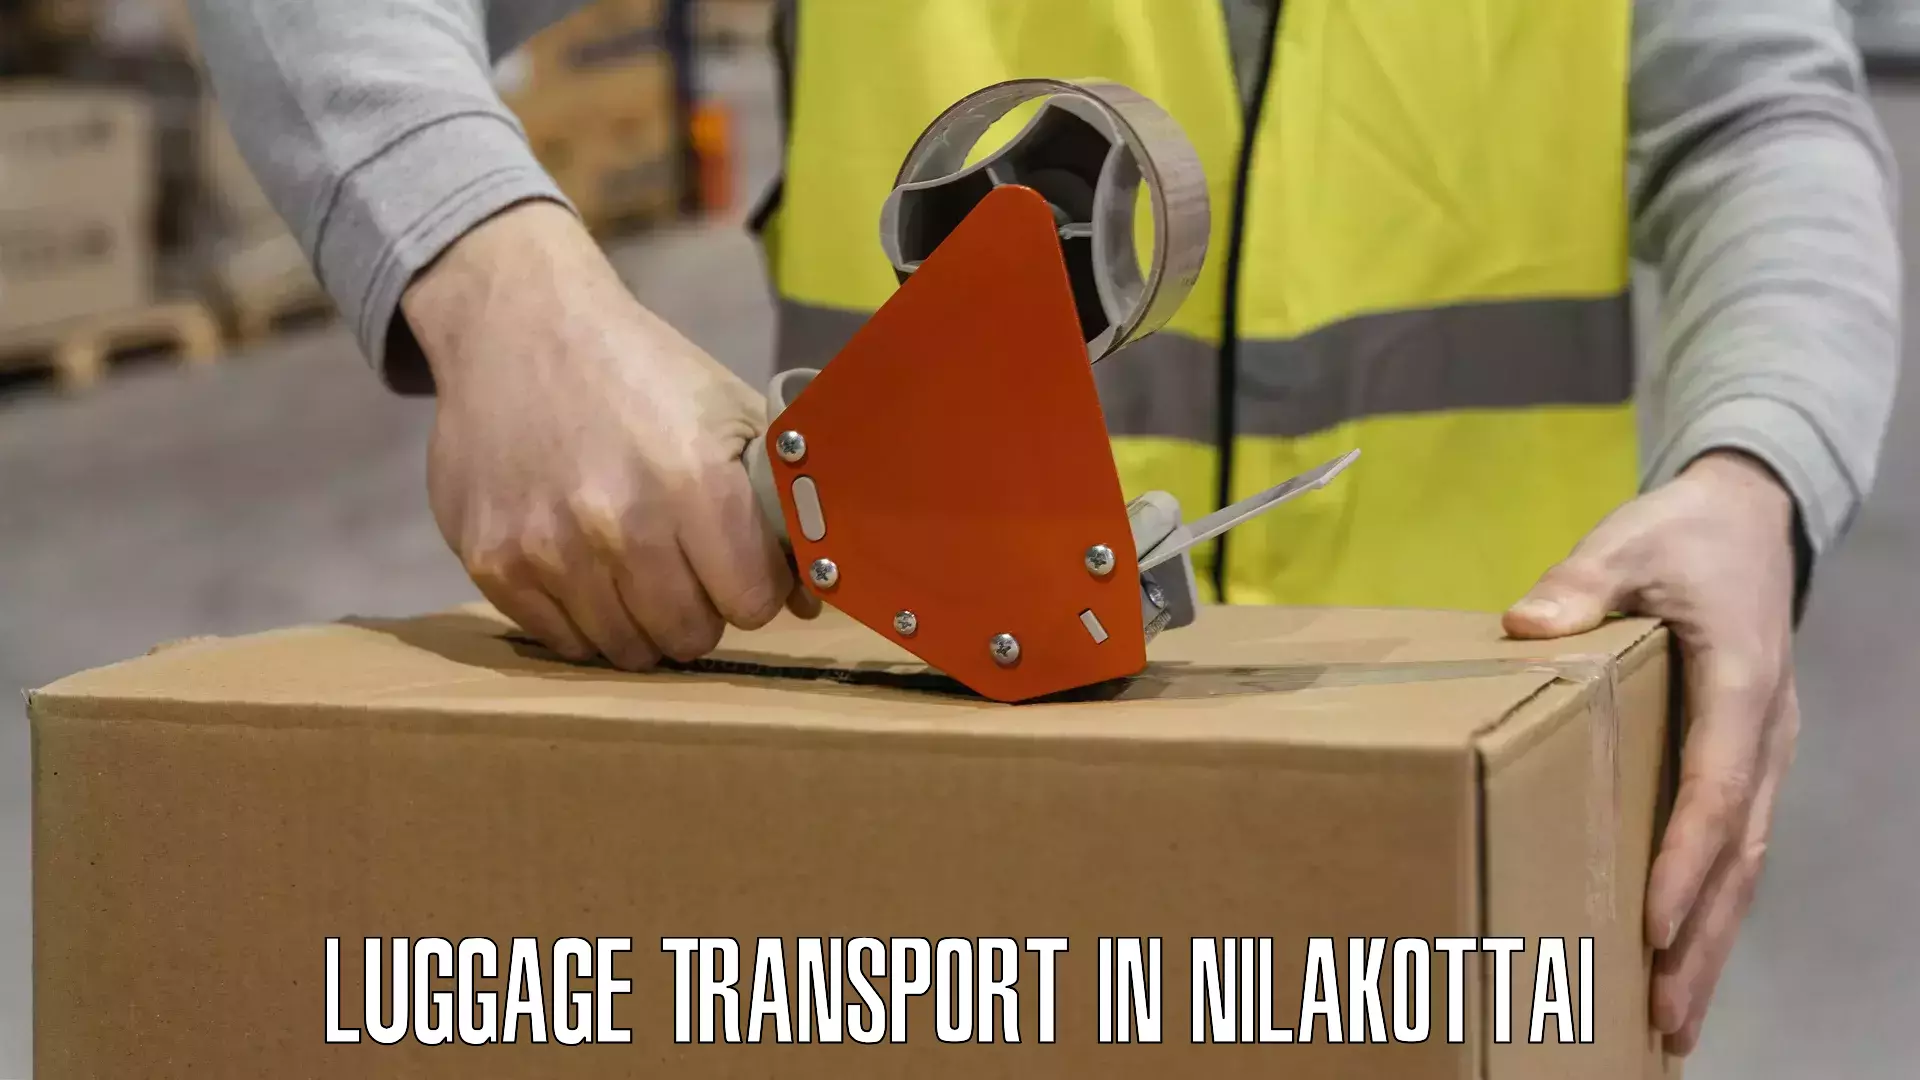 Luggage transport deals in Nilakottai